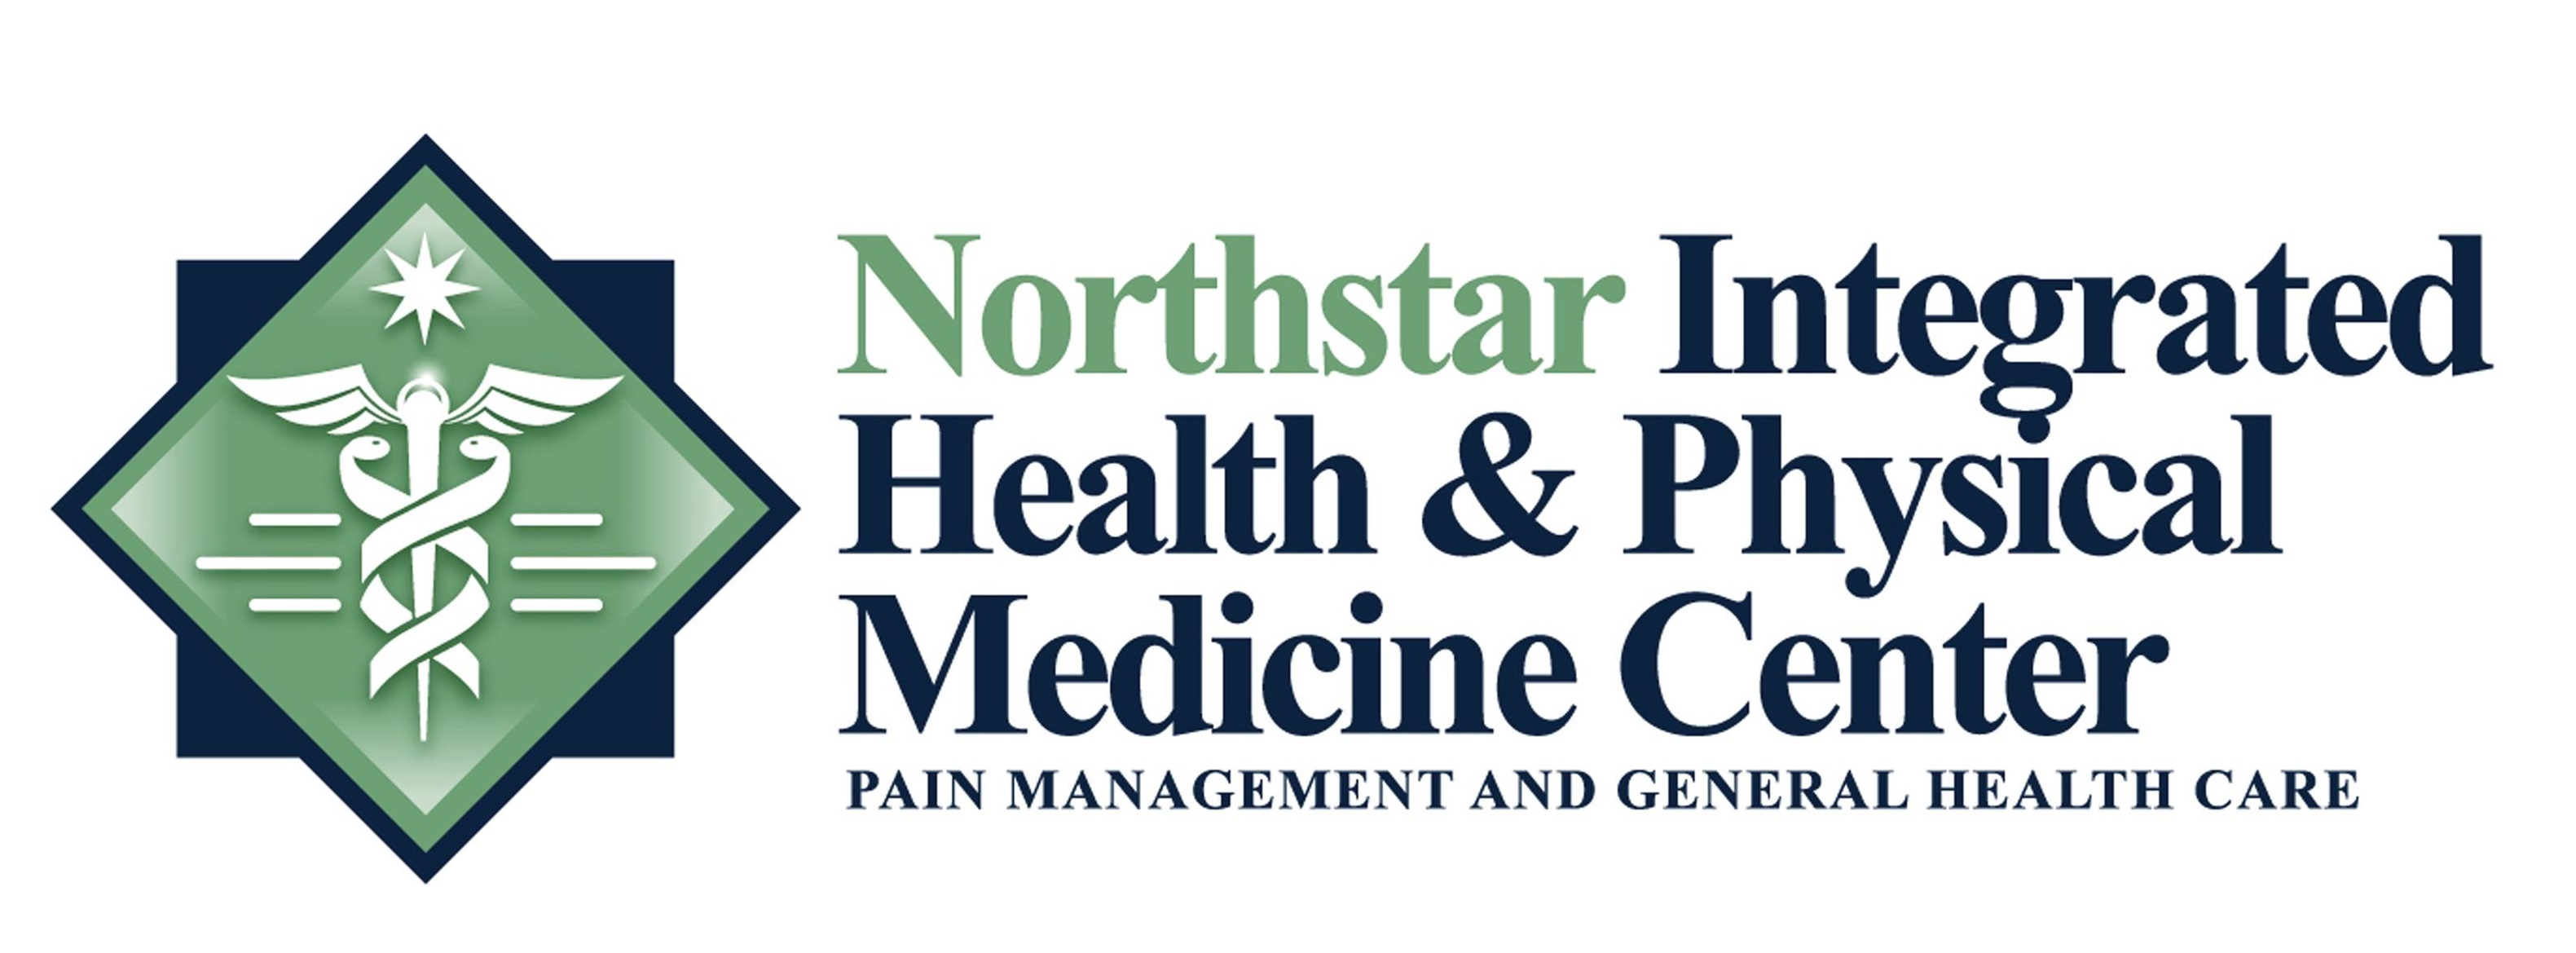 Northstar Integrated Health & Physical Medicine Center